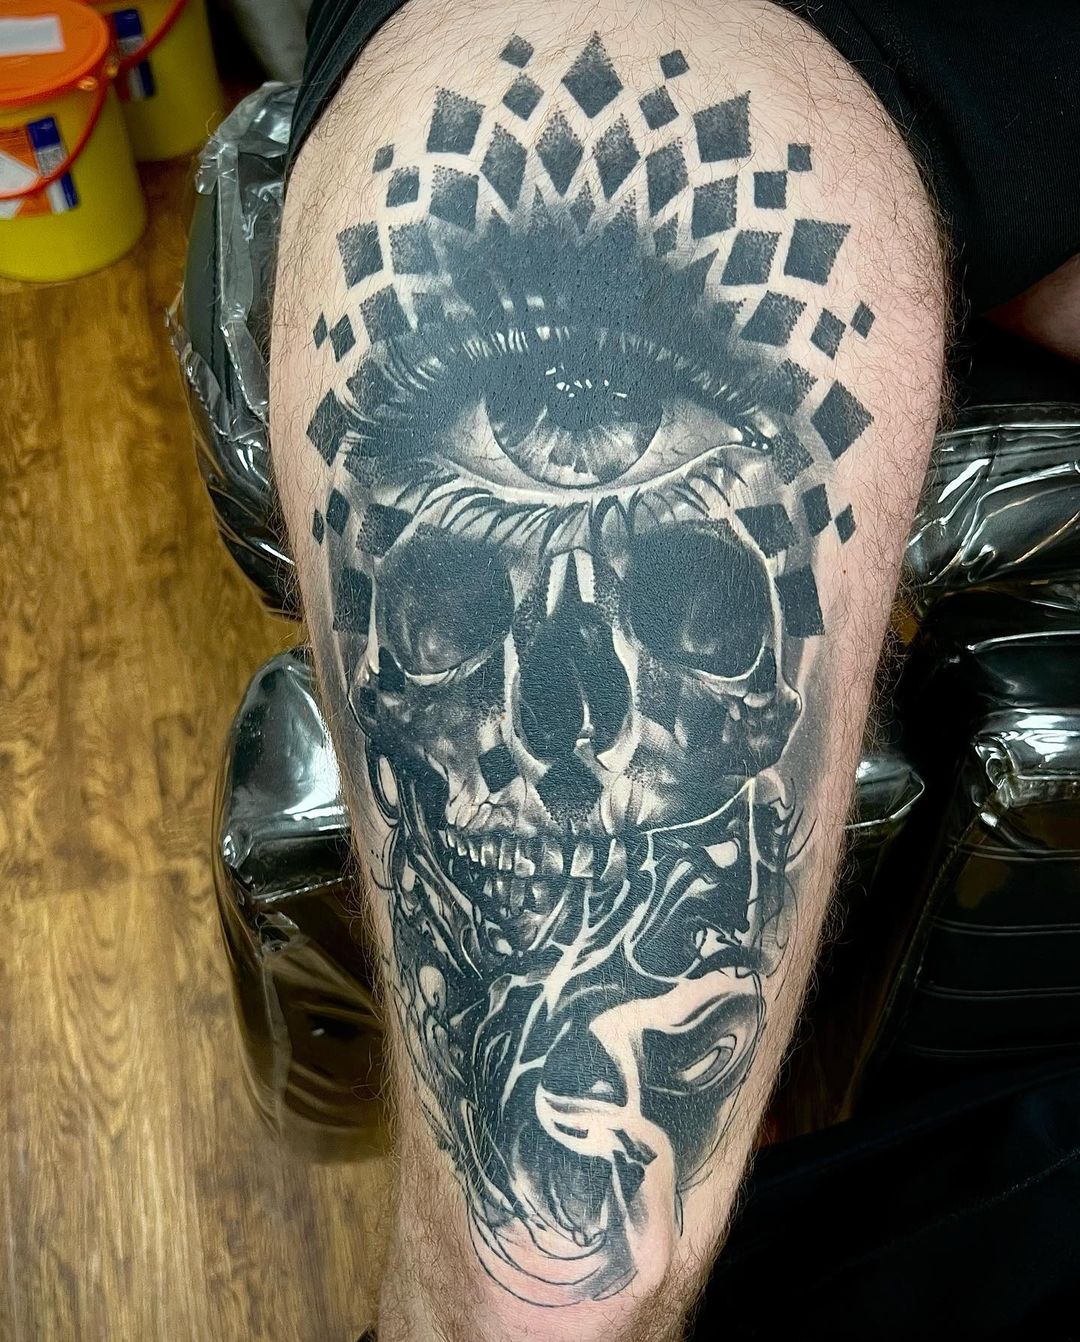  Huge Skull With Eye Tattoo